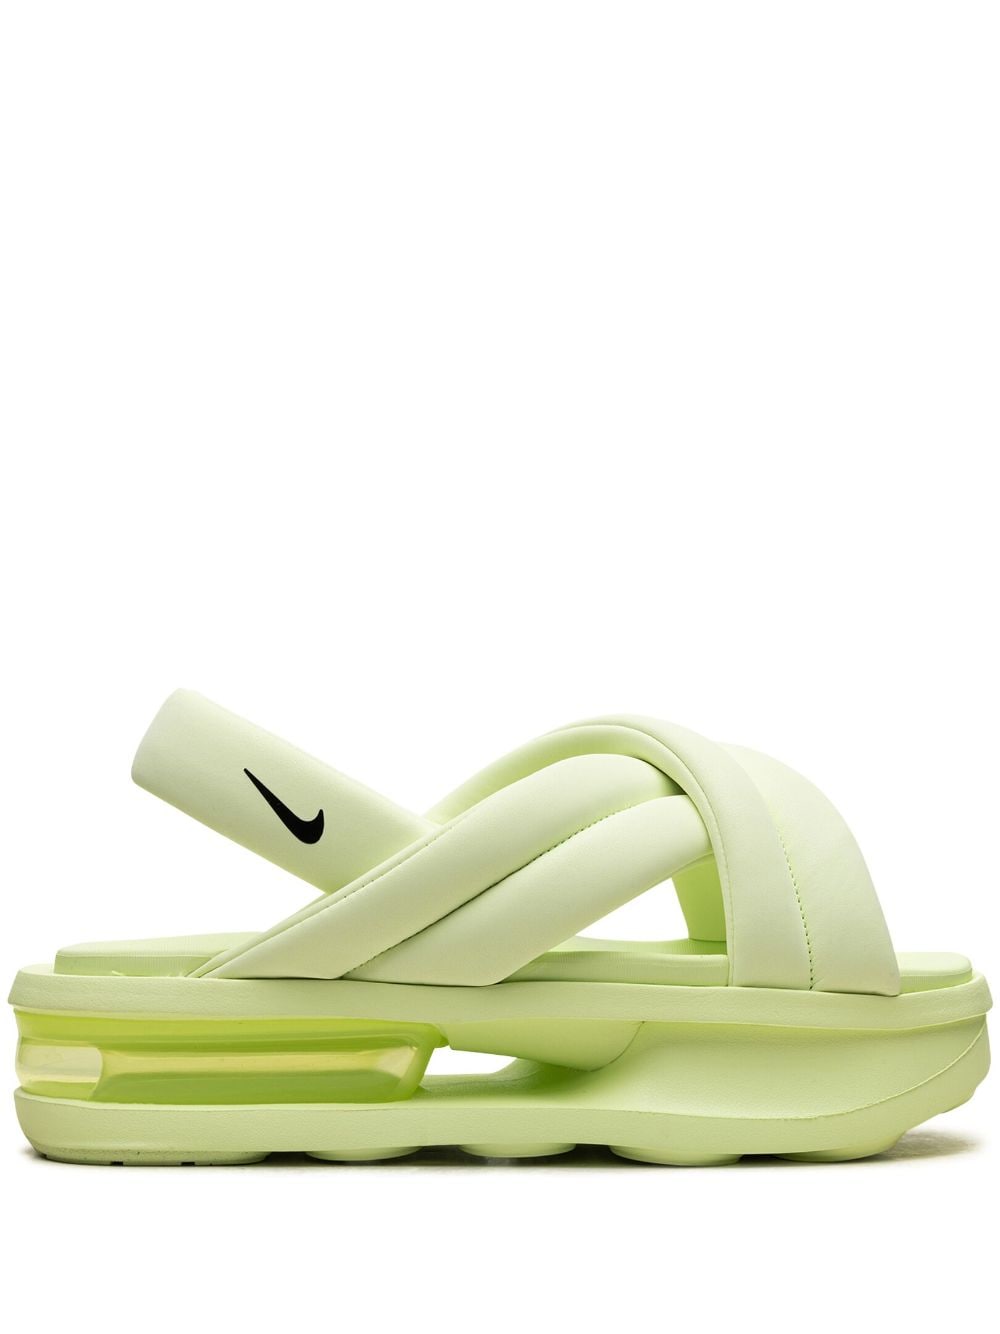 Nike Air Max Isla "Barely Volt" sandals - Green von Nike